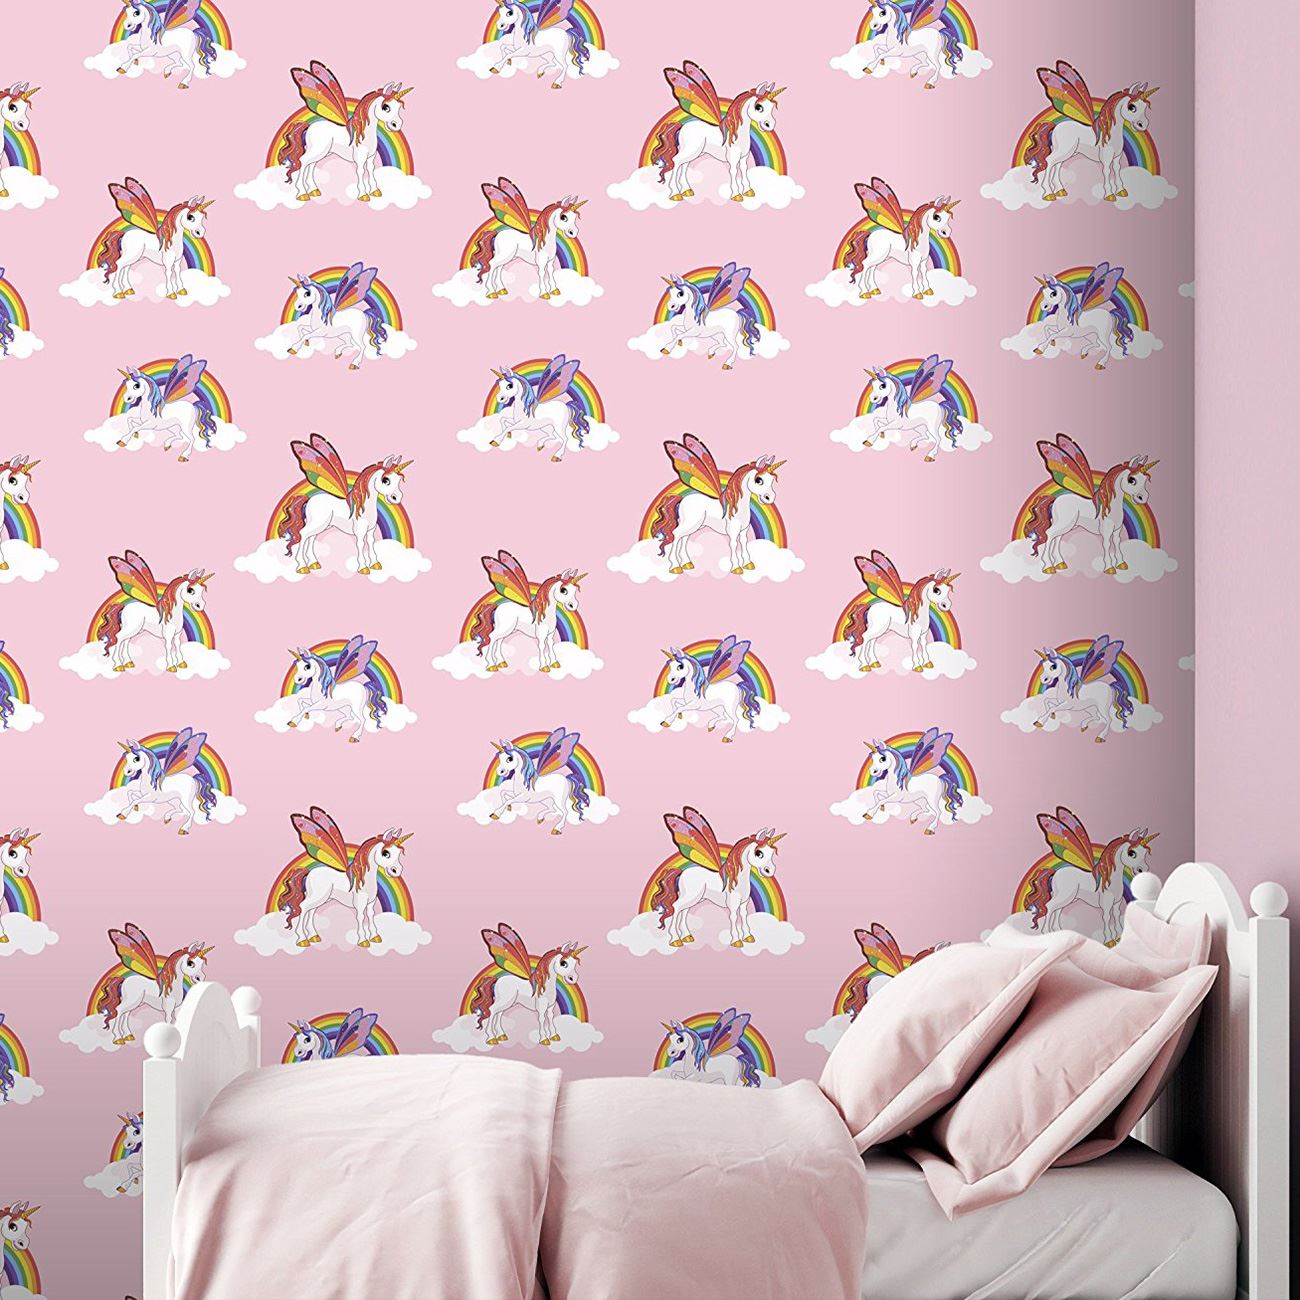 kids pink wallpaper,wallpaper,wall sticker,pink,wall,room